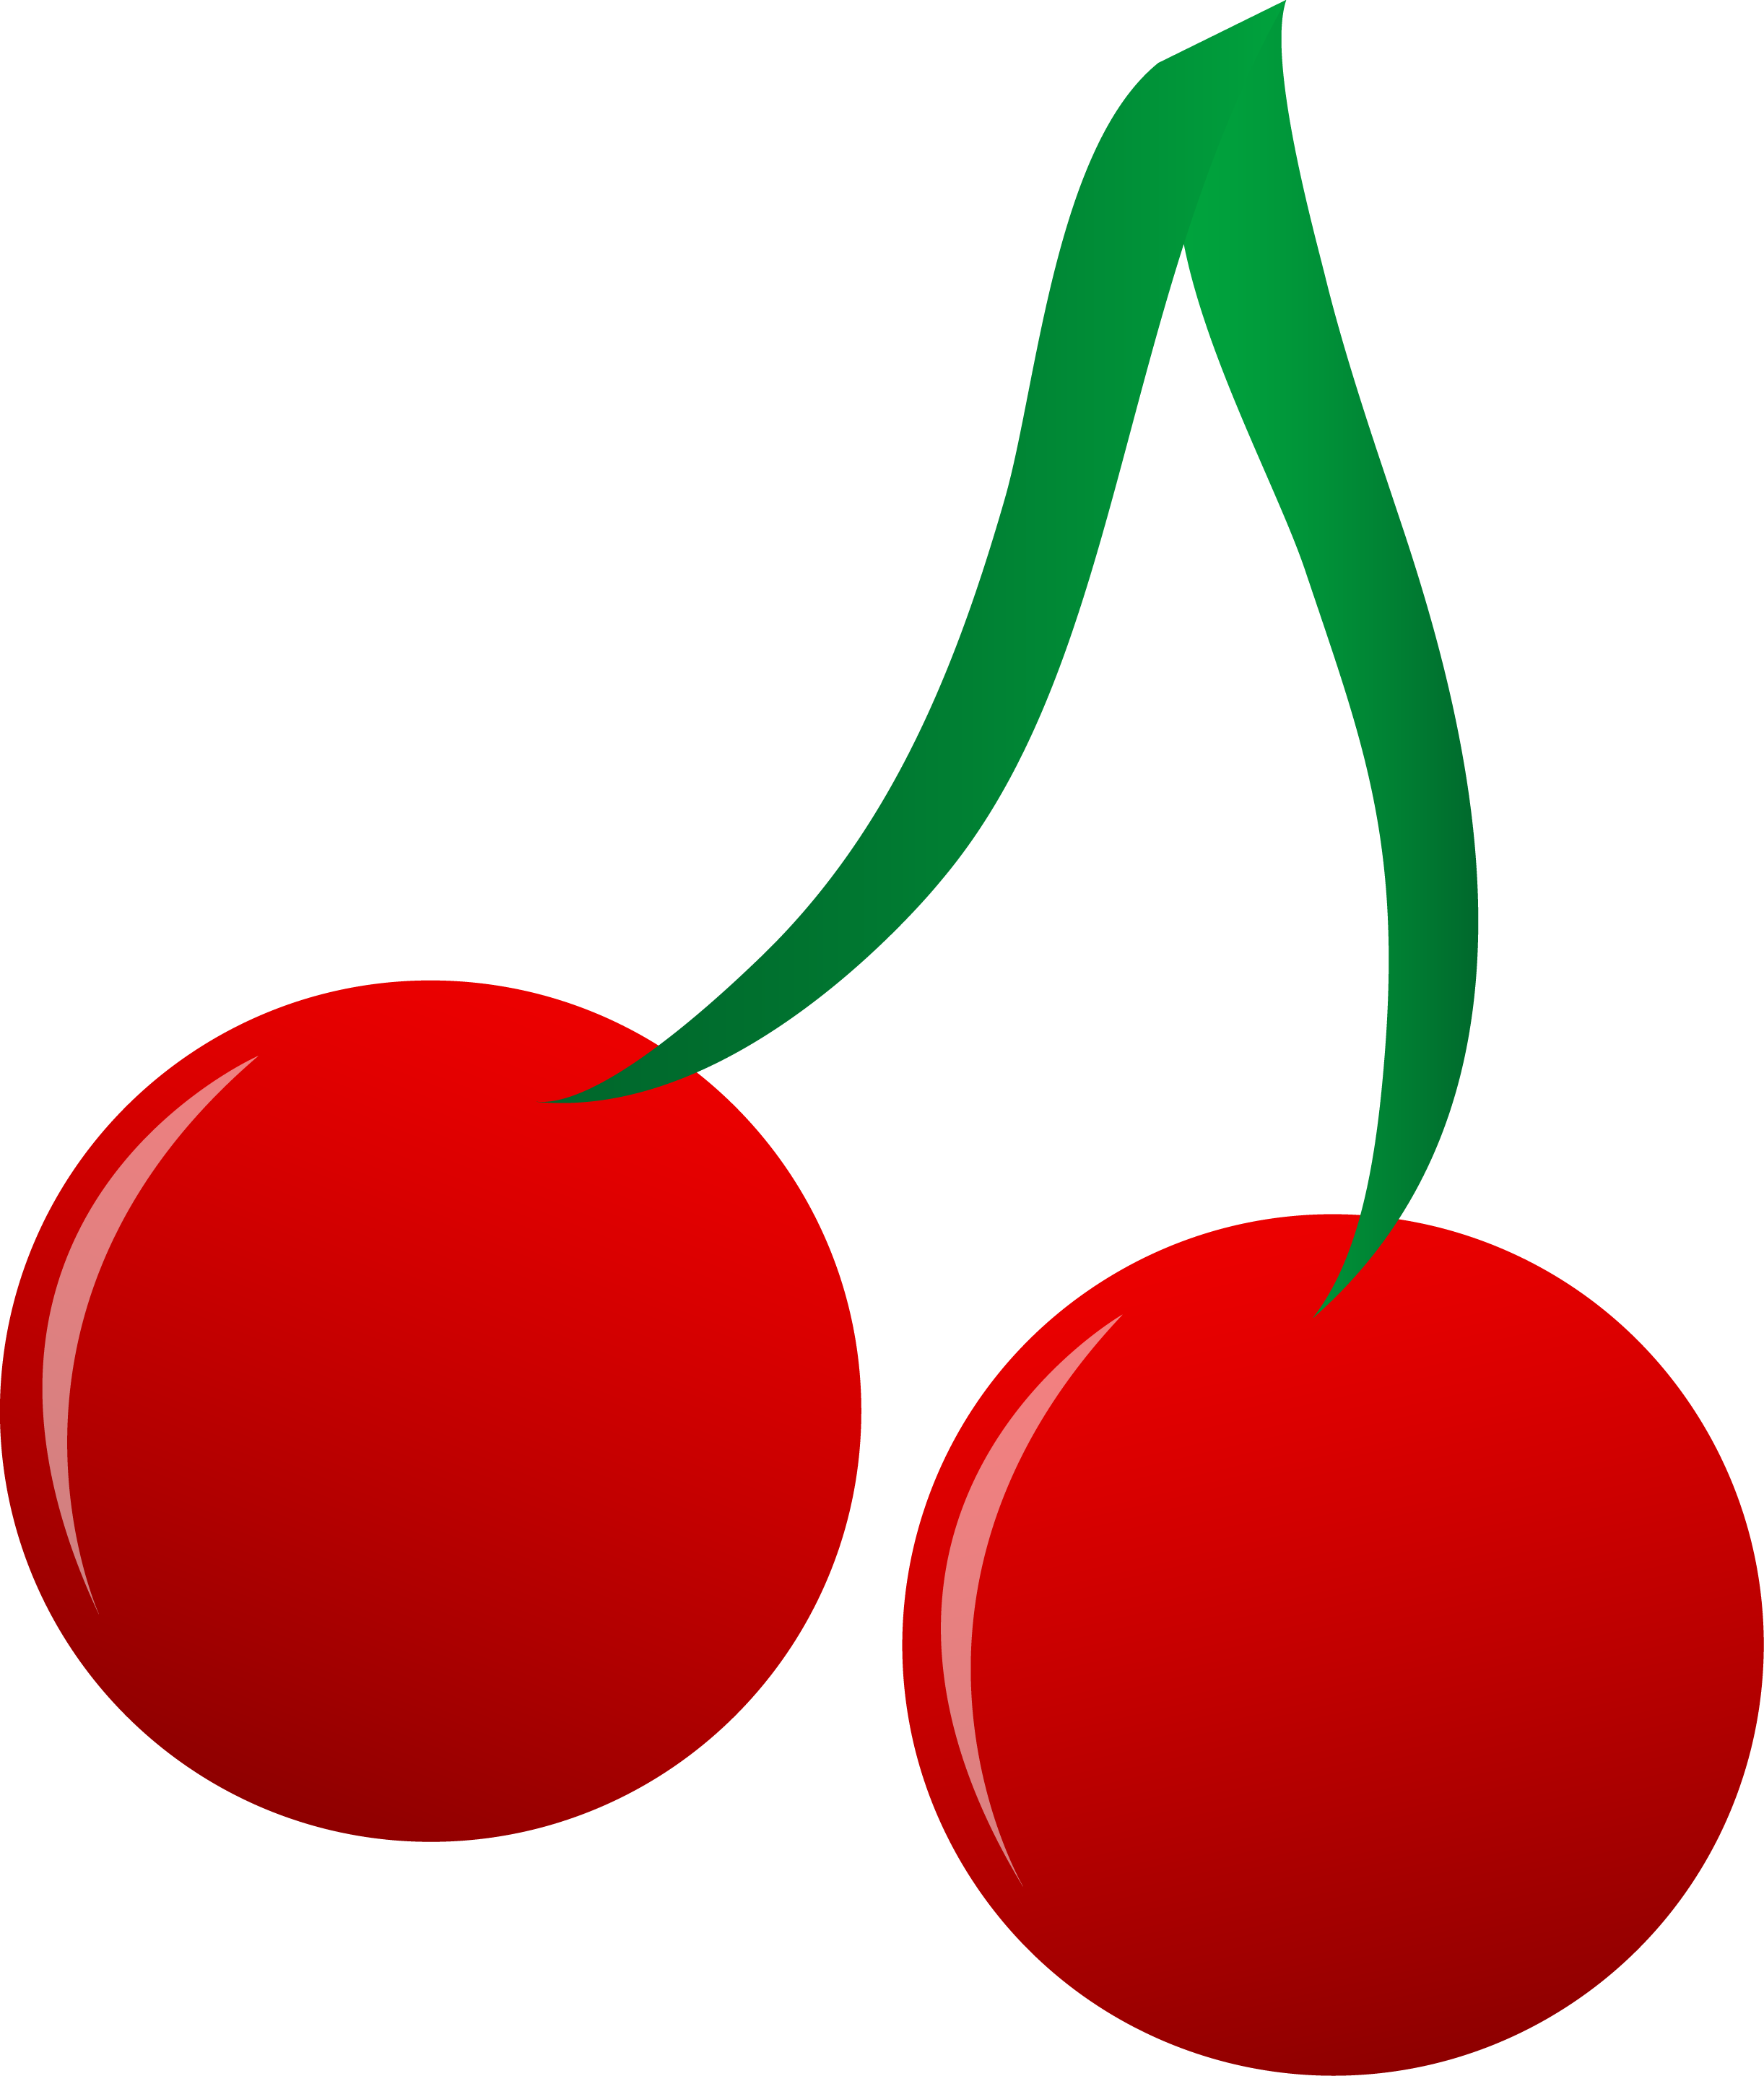 Bright Red Cherries Vector Art - Free Clip Art